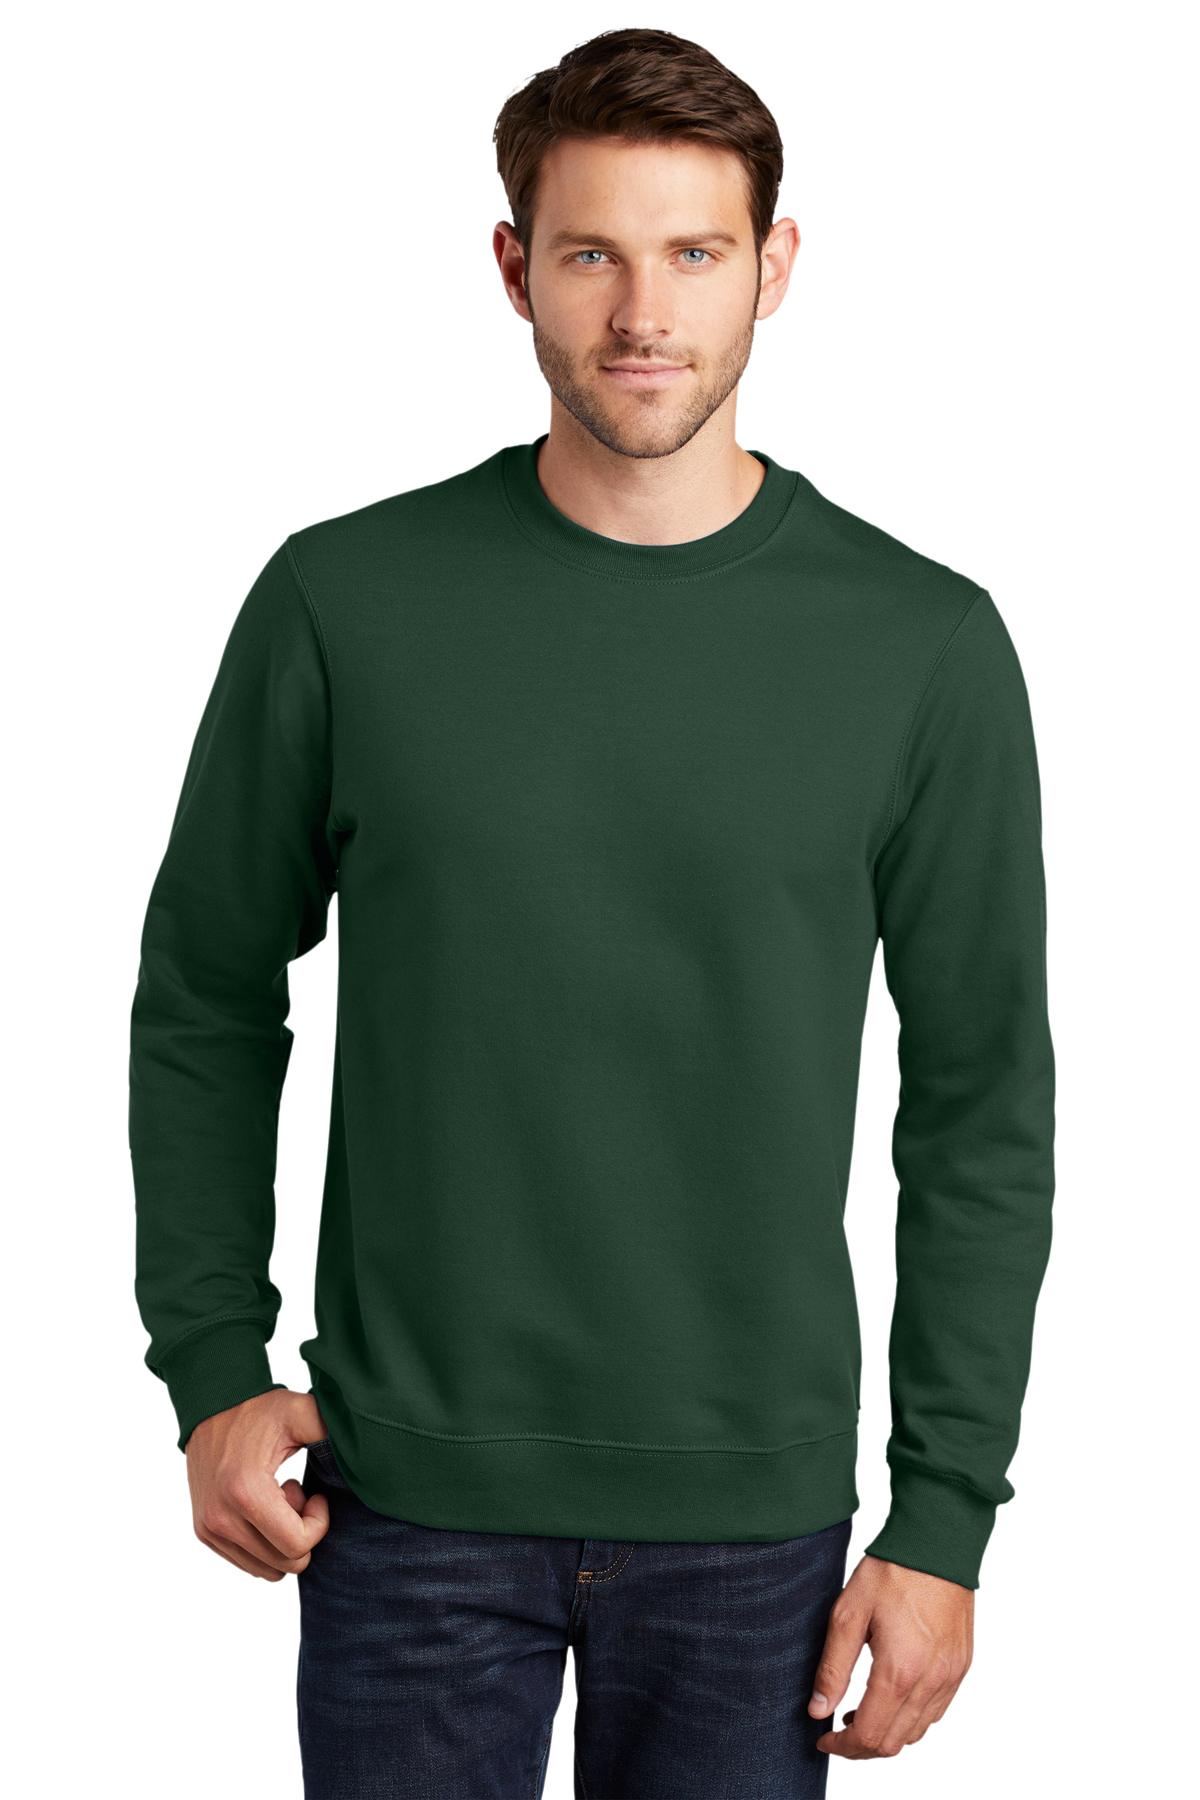 Port & Company Fan Favorite Fleece Crewneck Sweatshirt-4XL (Bright Red)